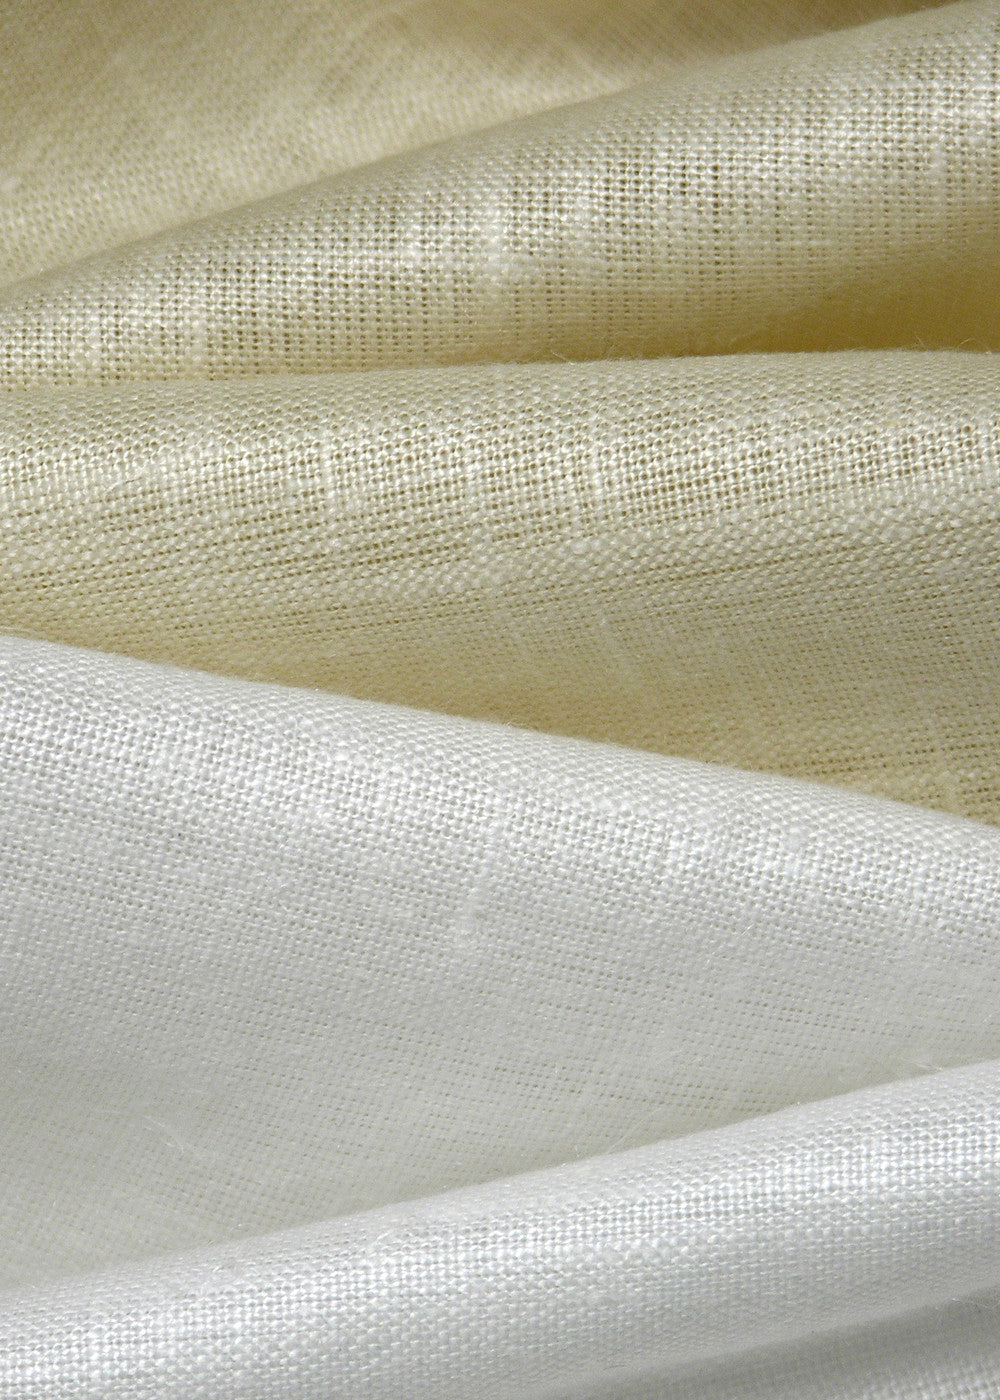 several sheer neutral fabrics with a luminous finish